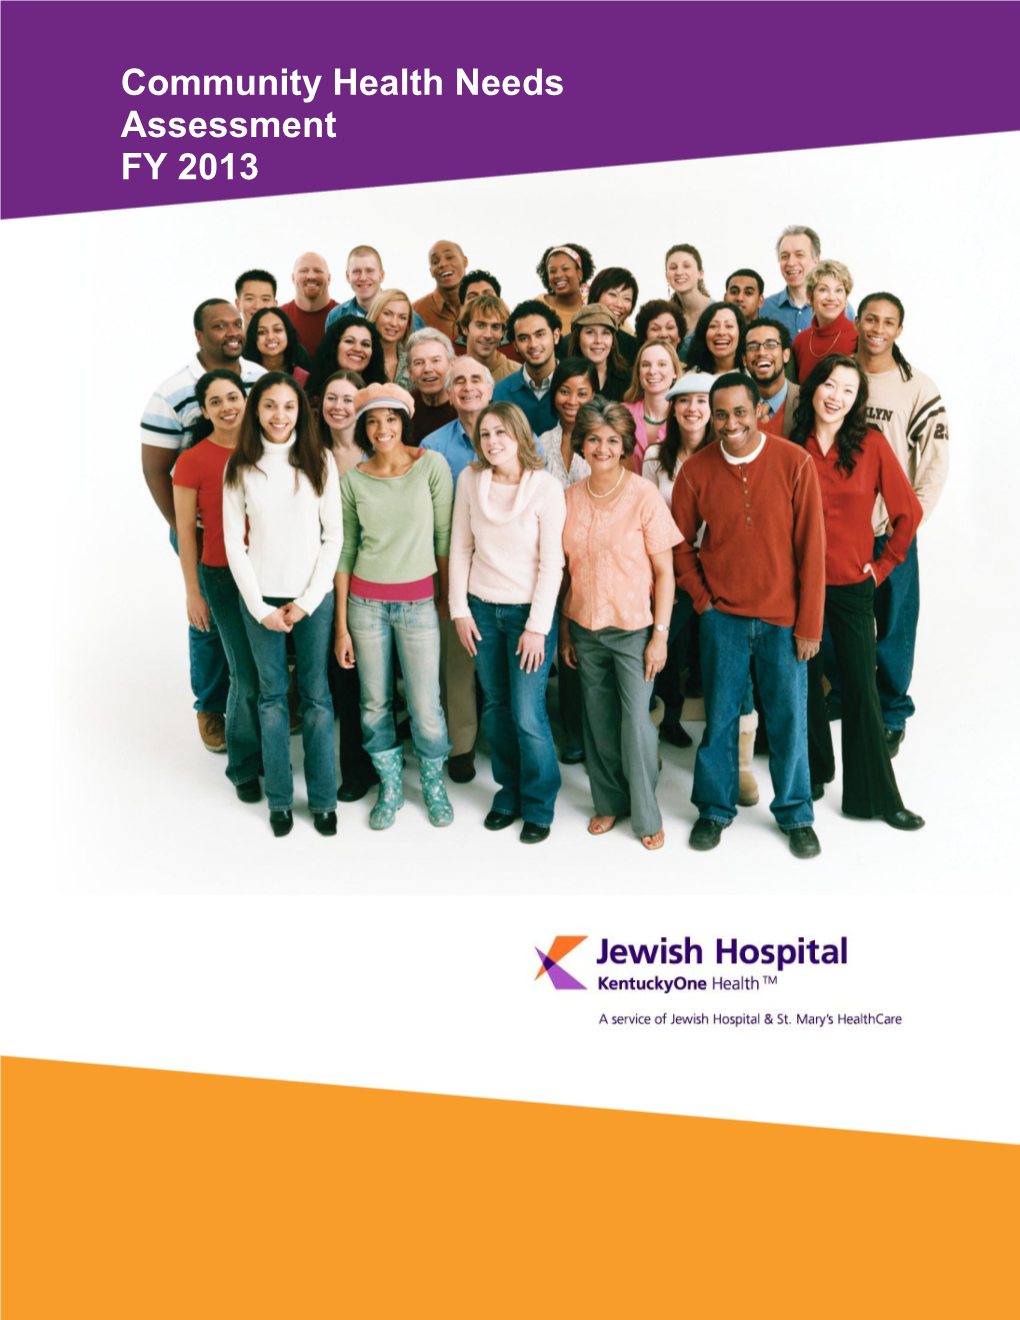 Jewish Hospital – Community Health Needs Assessment